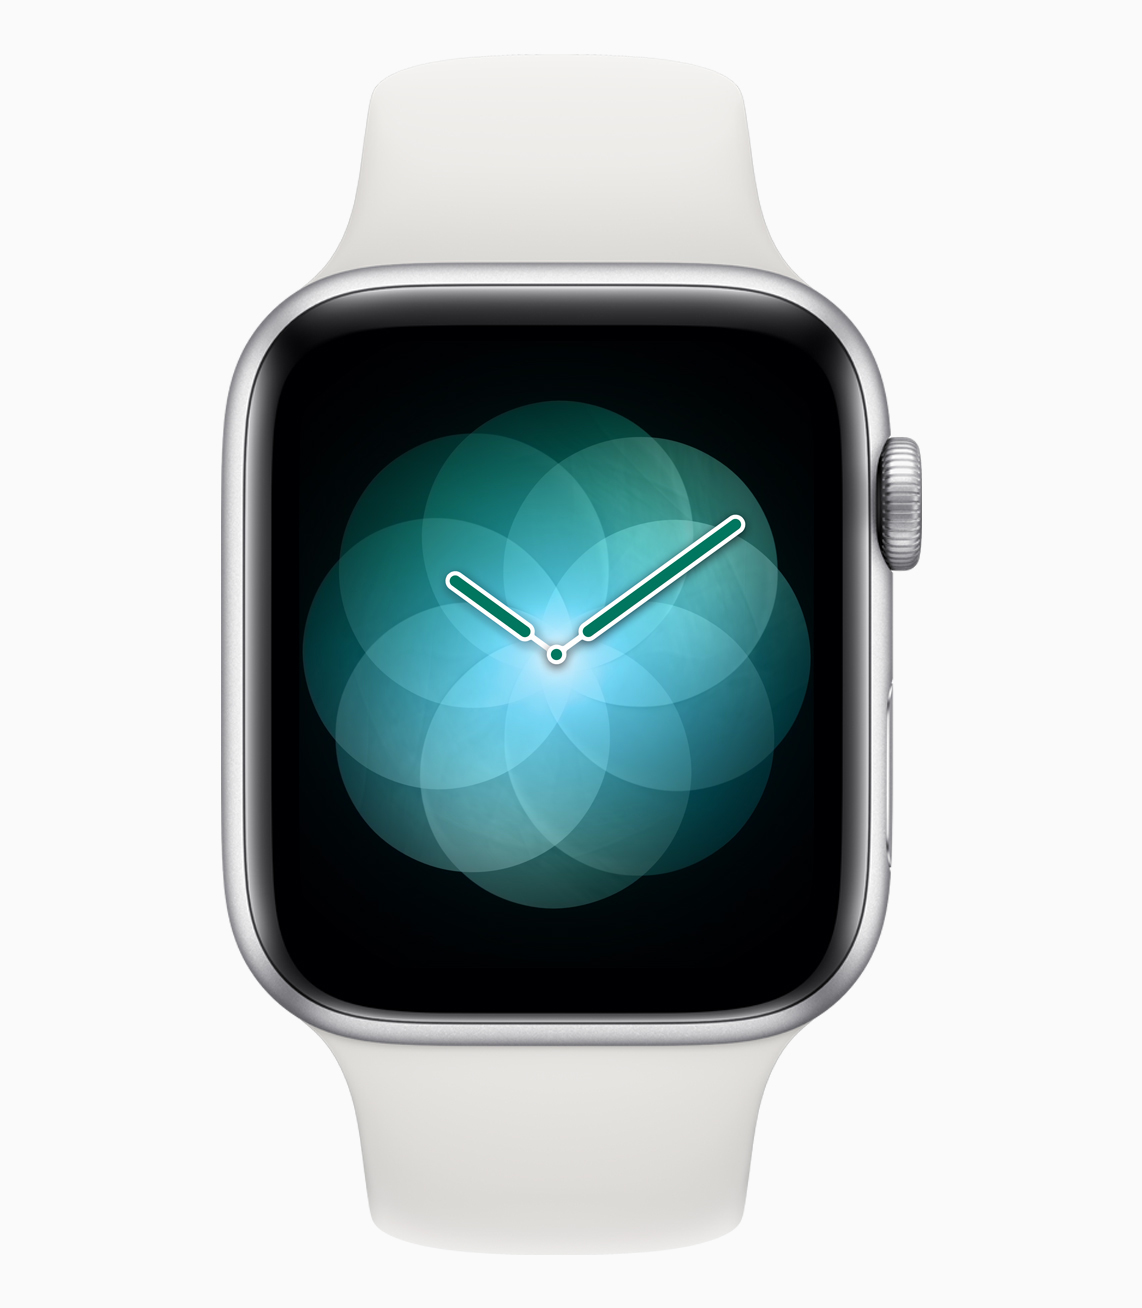 Часы похожие на apple. Смарт часы эпл вотч 4. Айфон Эппл вотч 4. Айфон и часы эпл вотч. Apple watch s4.